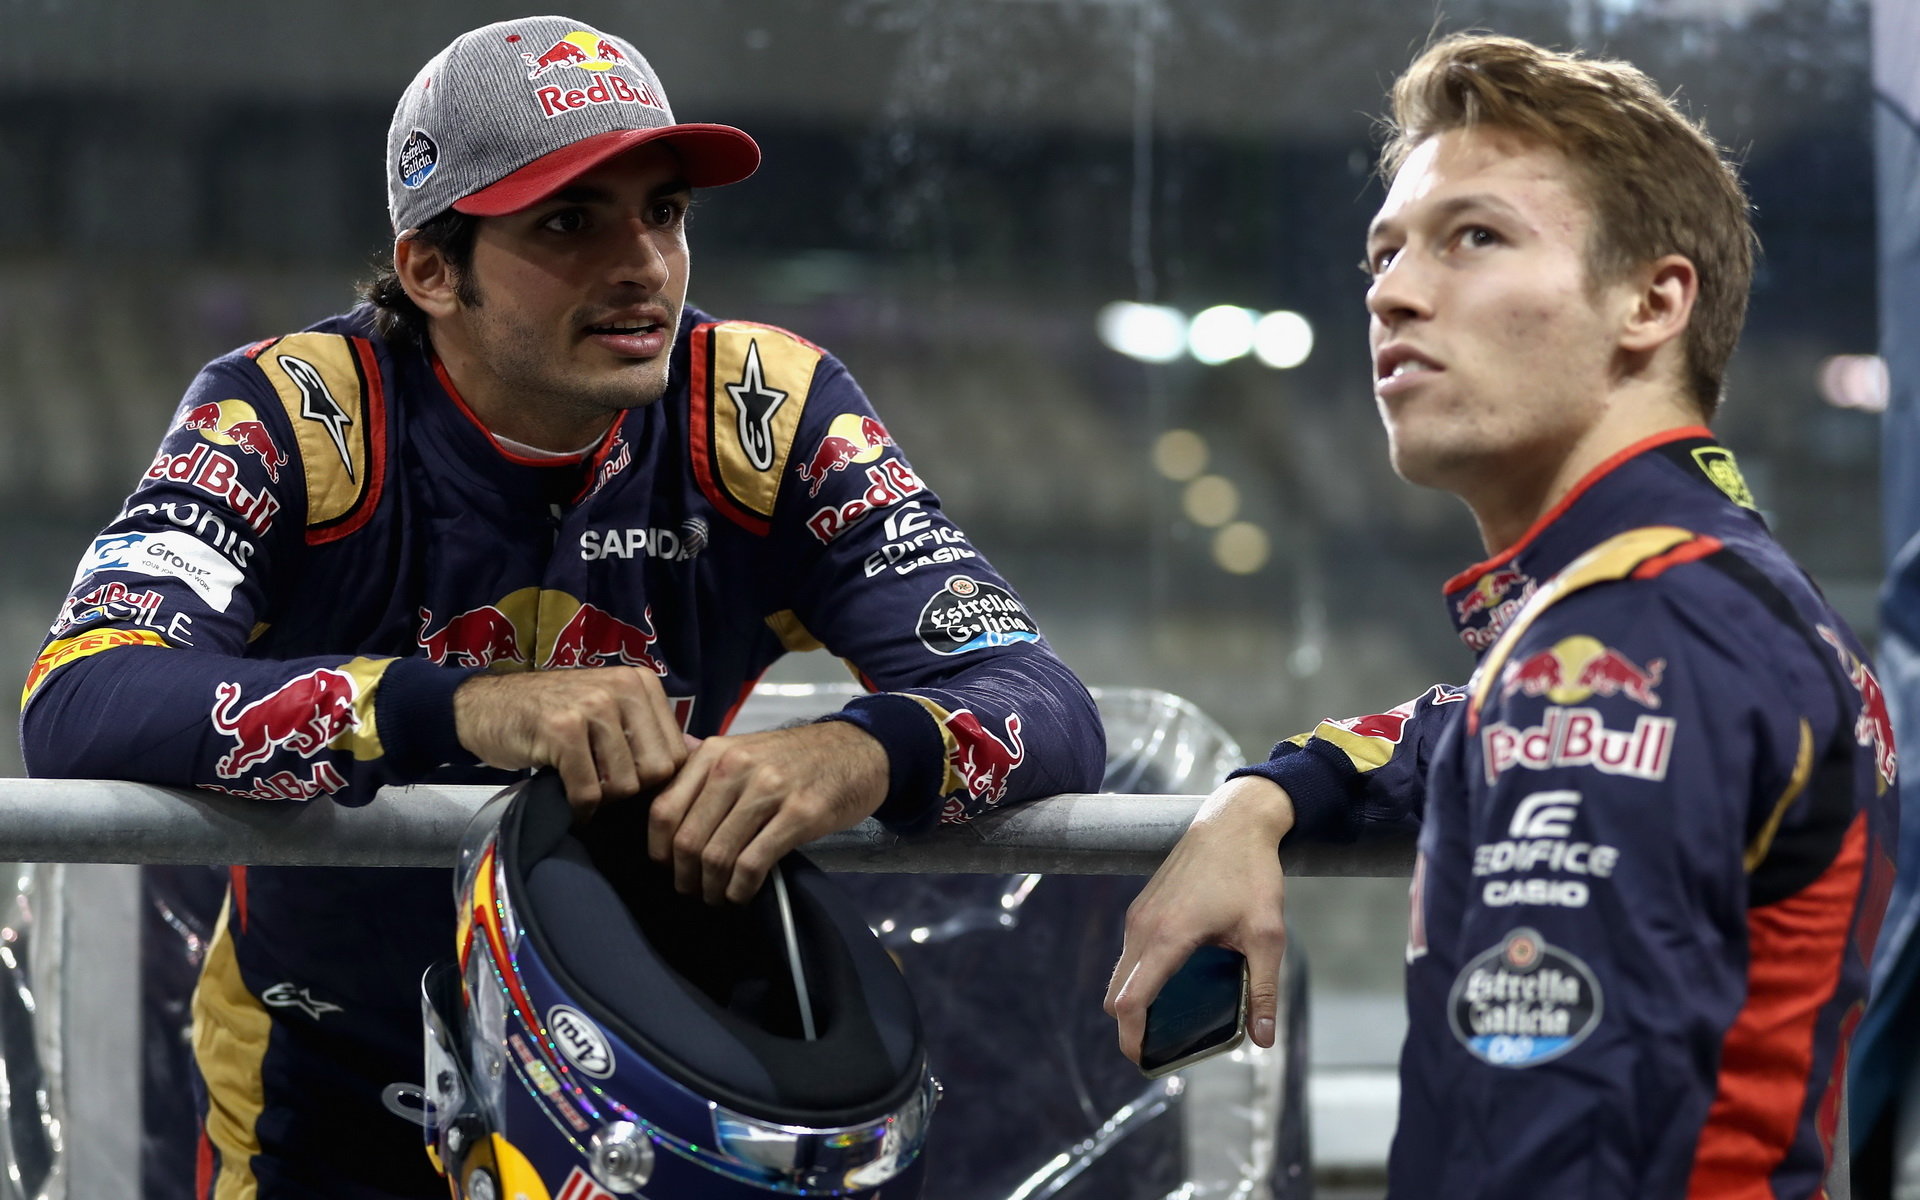 Carlos Sainz svého nového týmového kolegu Daniila Kvjata po odchodu Maxe Verstappena k Red Bullu jasně předčil